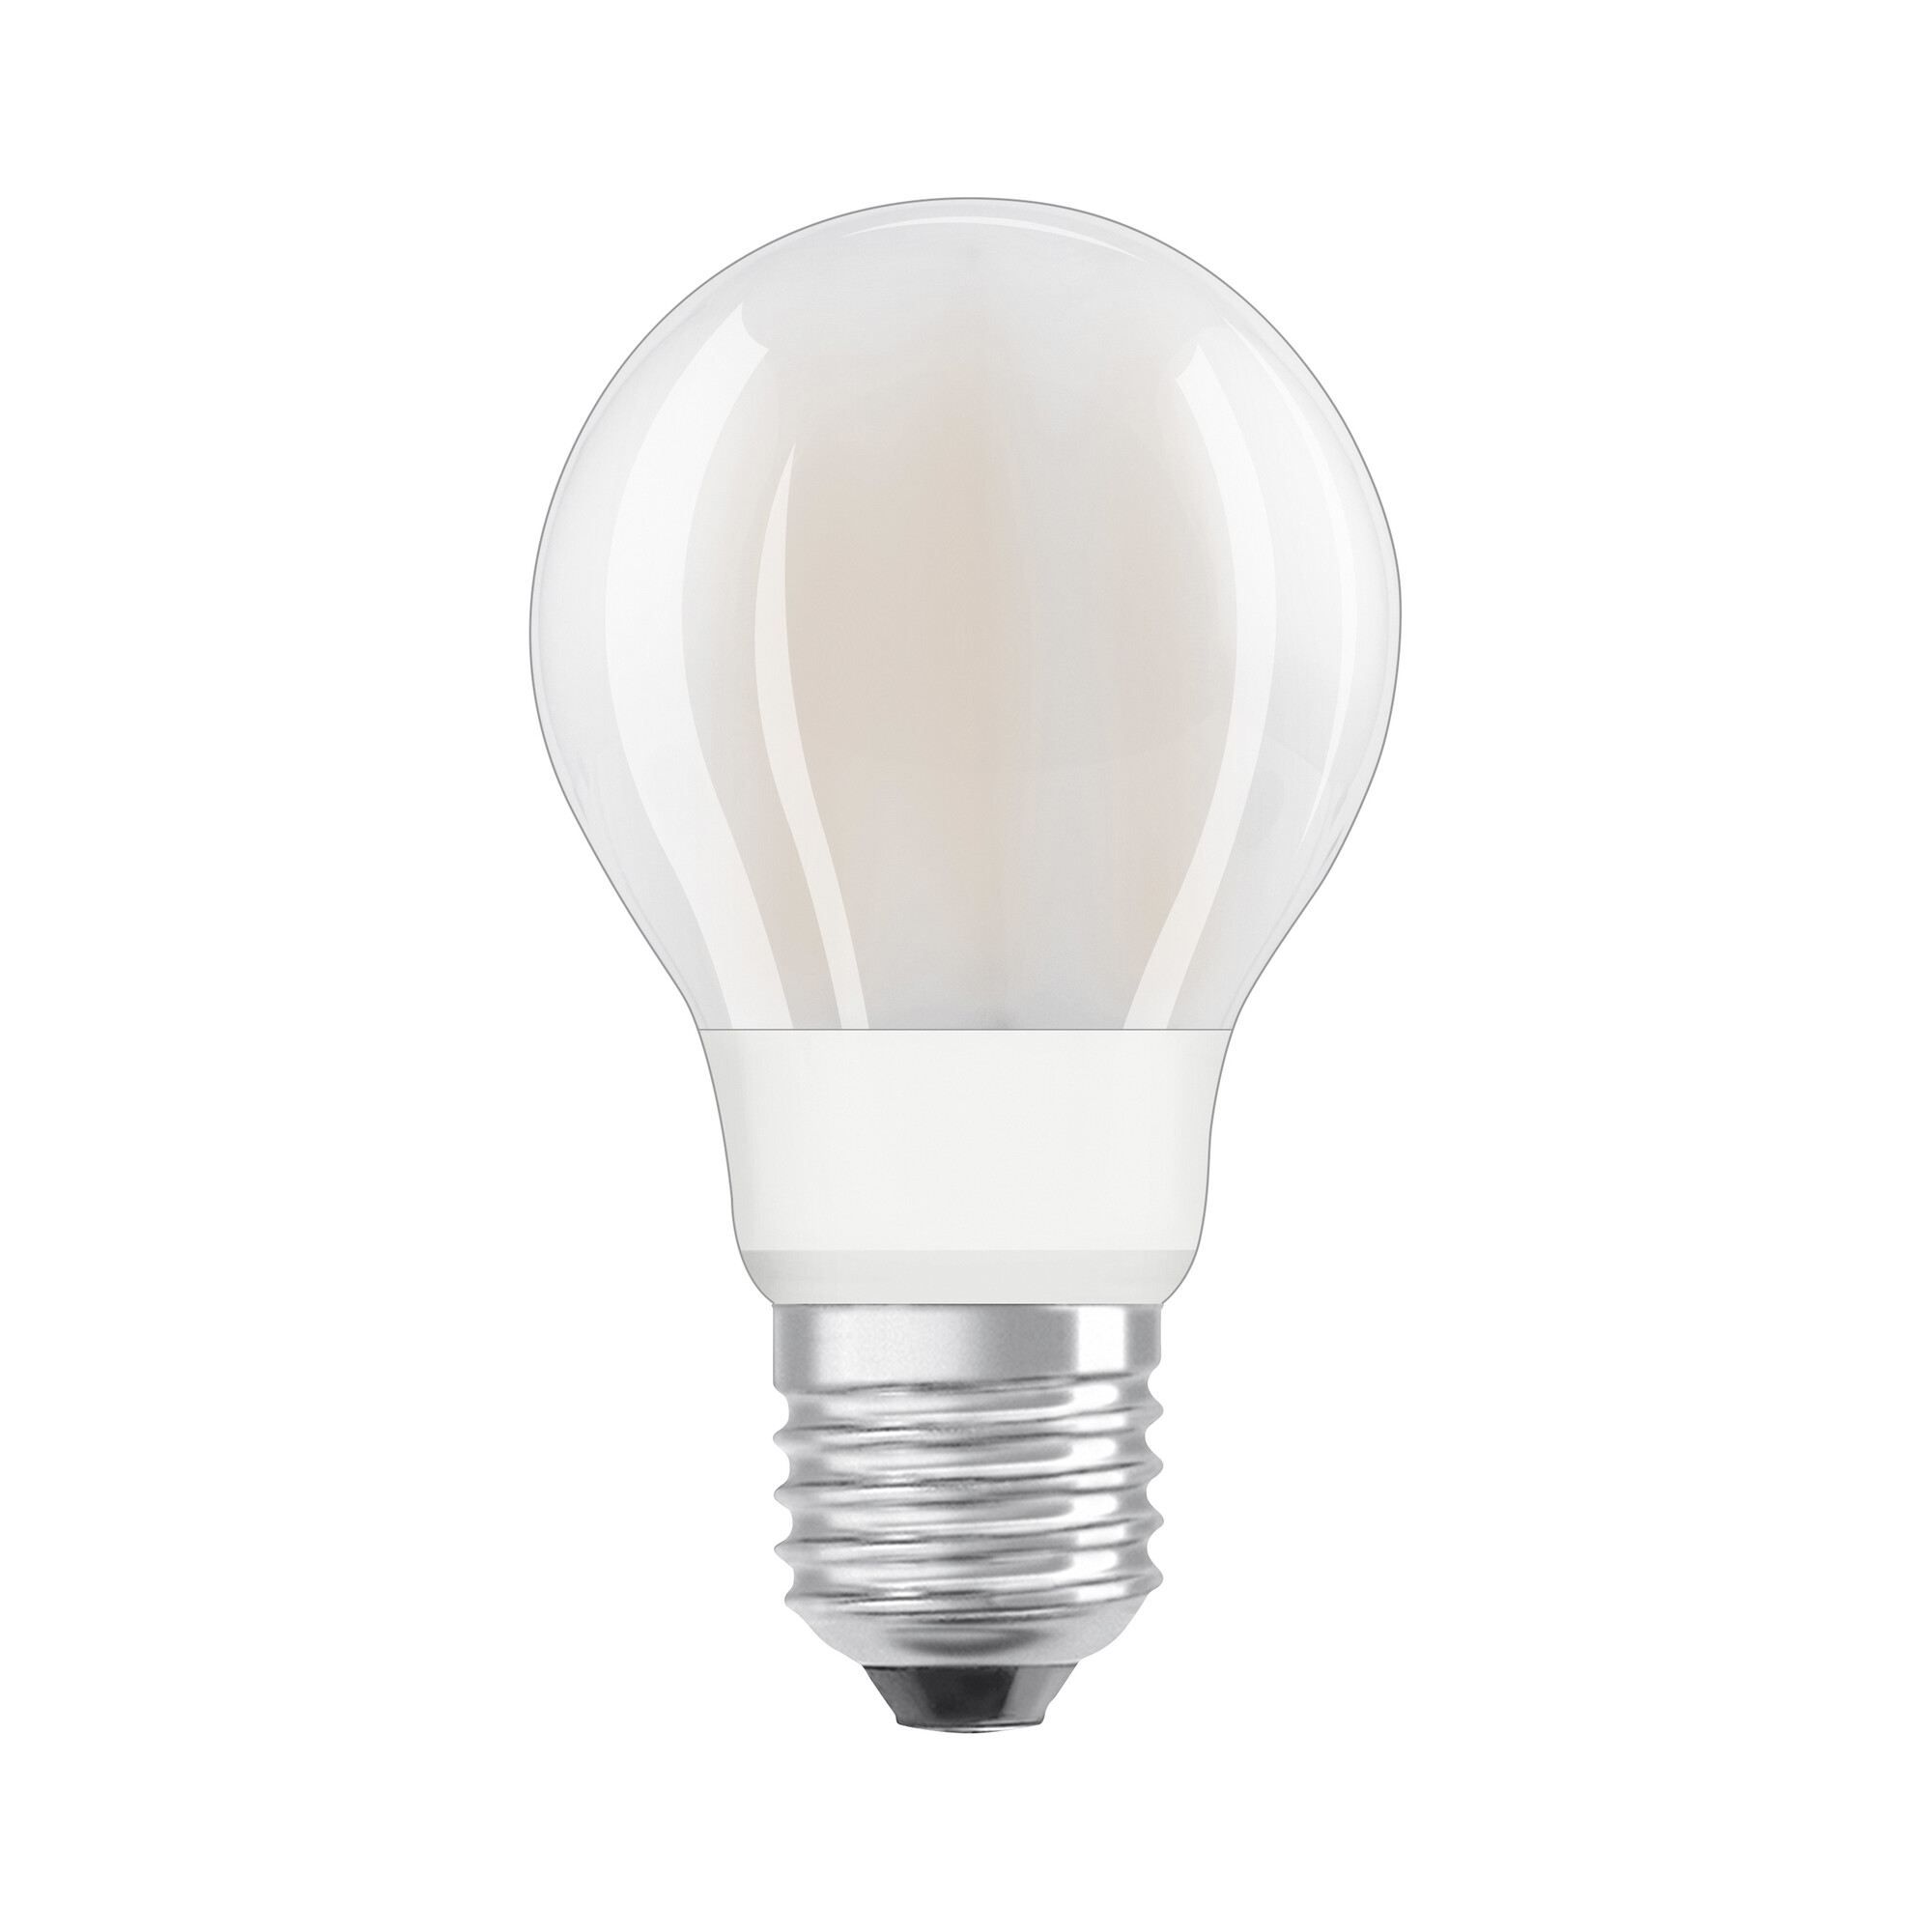 LED-Filament Lampe 'Smart+ WiFi CLA' warmweiß 11 W E27 1521 lm, dimmbar + product picture